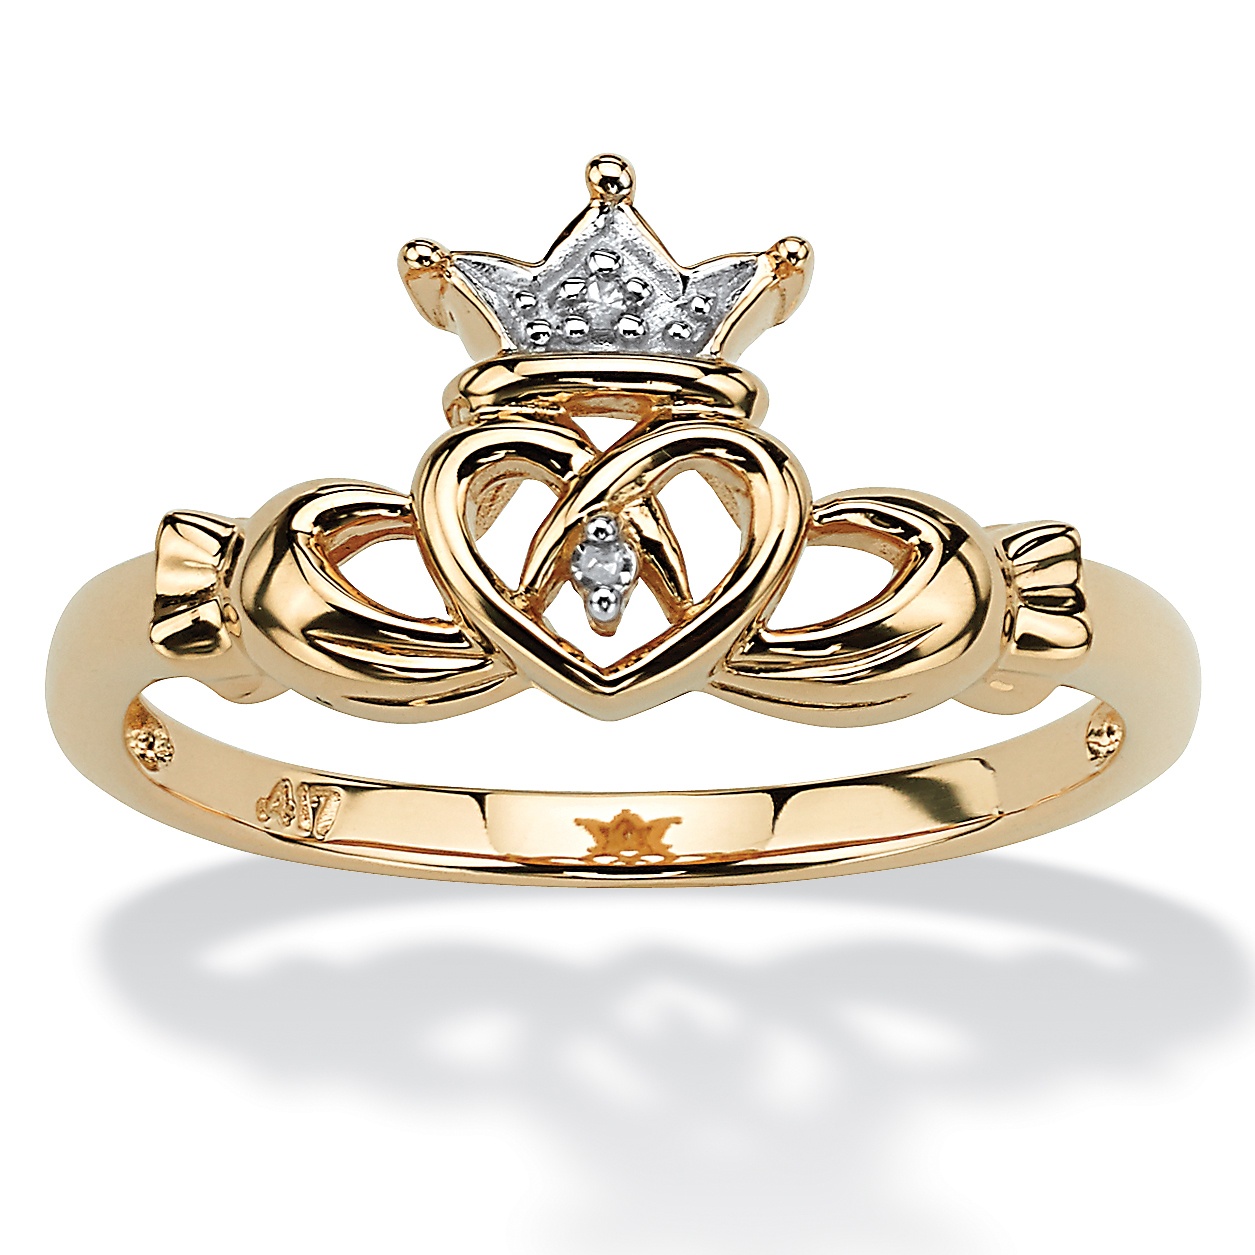 10k Gold Claddagh Ring. $129.99. PalmBeachJewelry.com